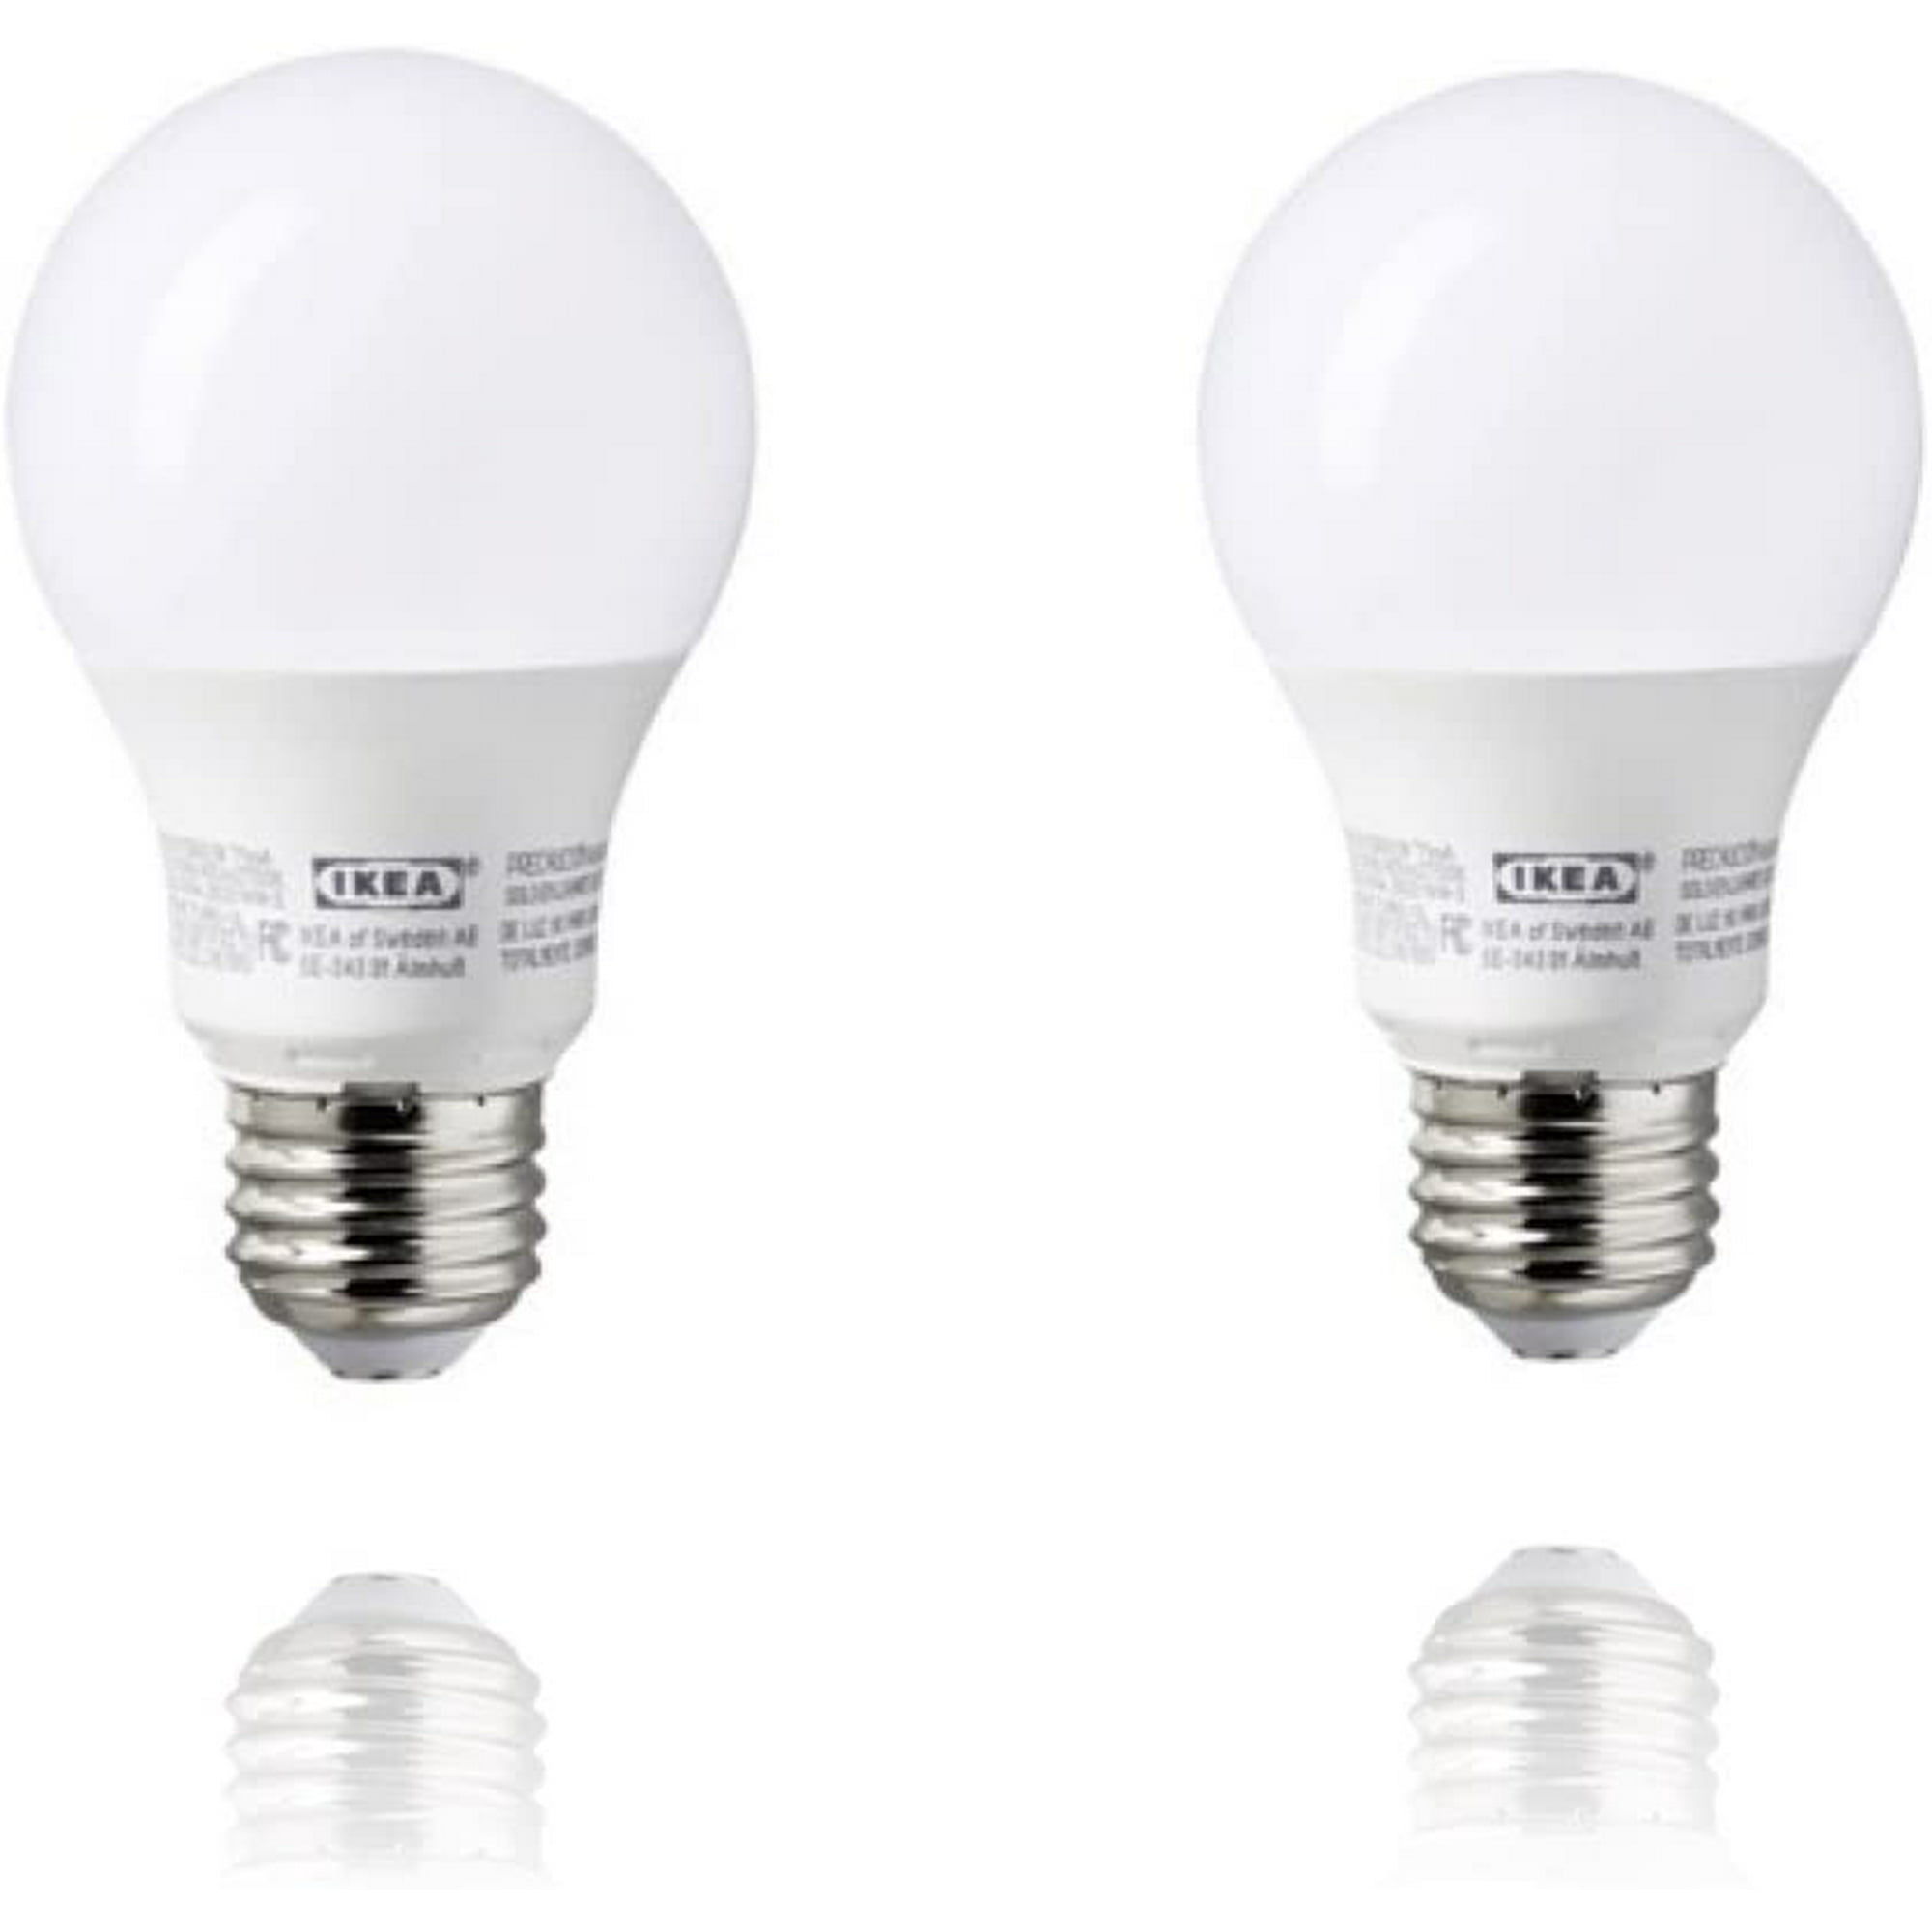 Ikea E26 Led Light Bulb 400 Lumen 2, Do Ikea Lamps Use Regular Bulbs